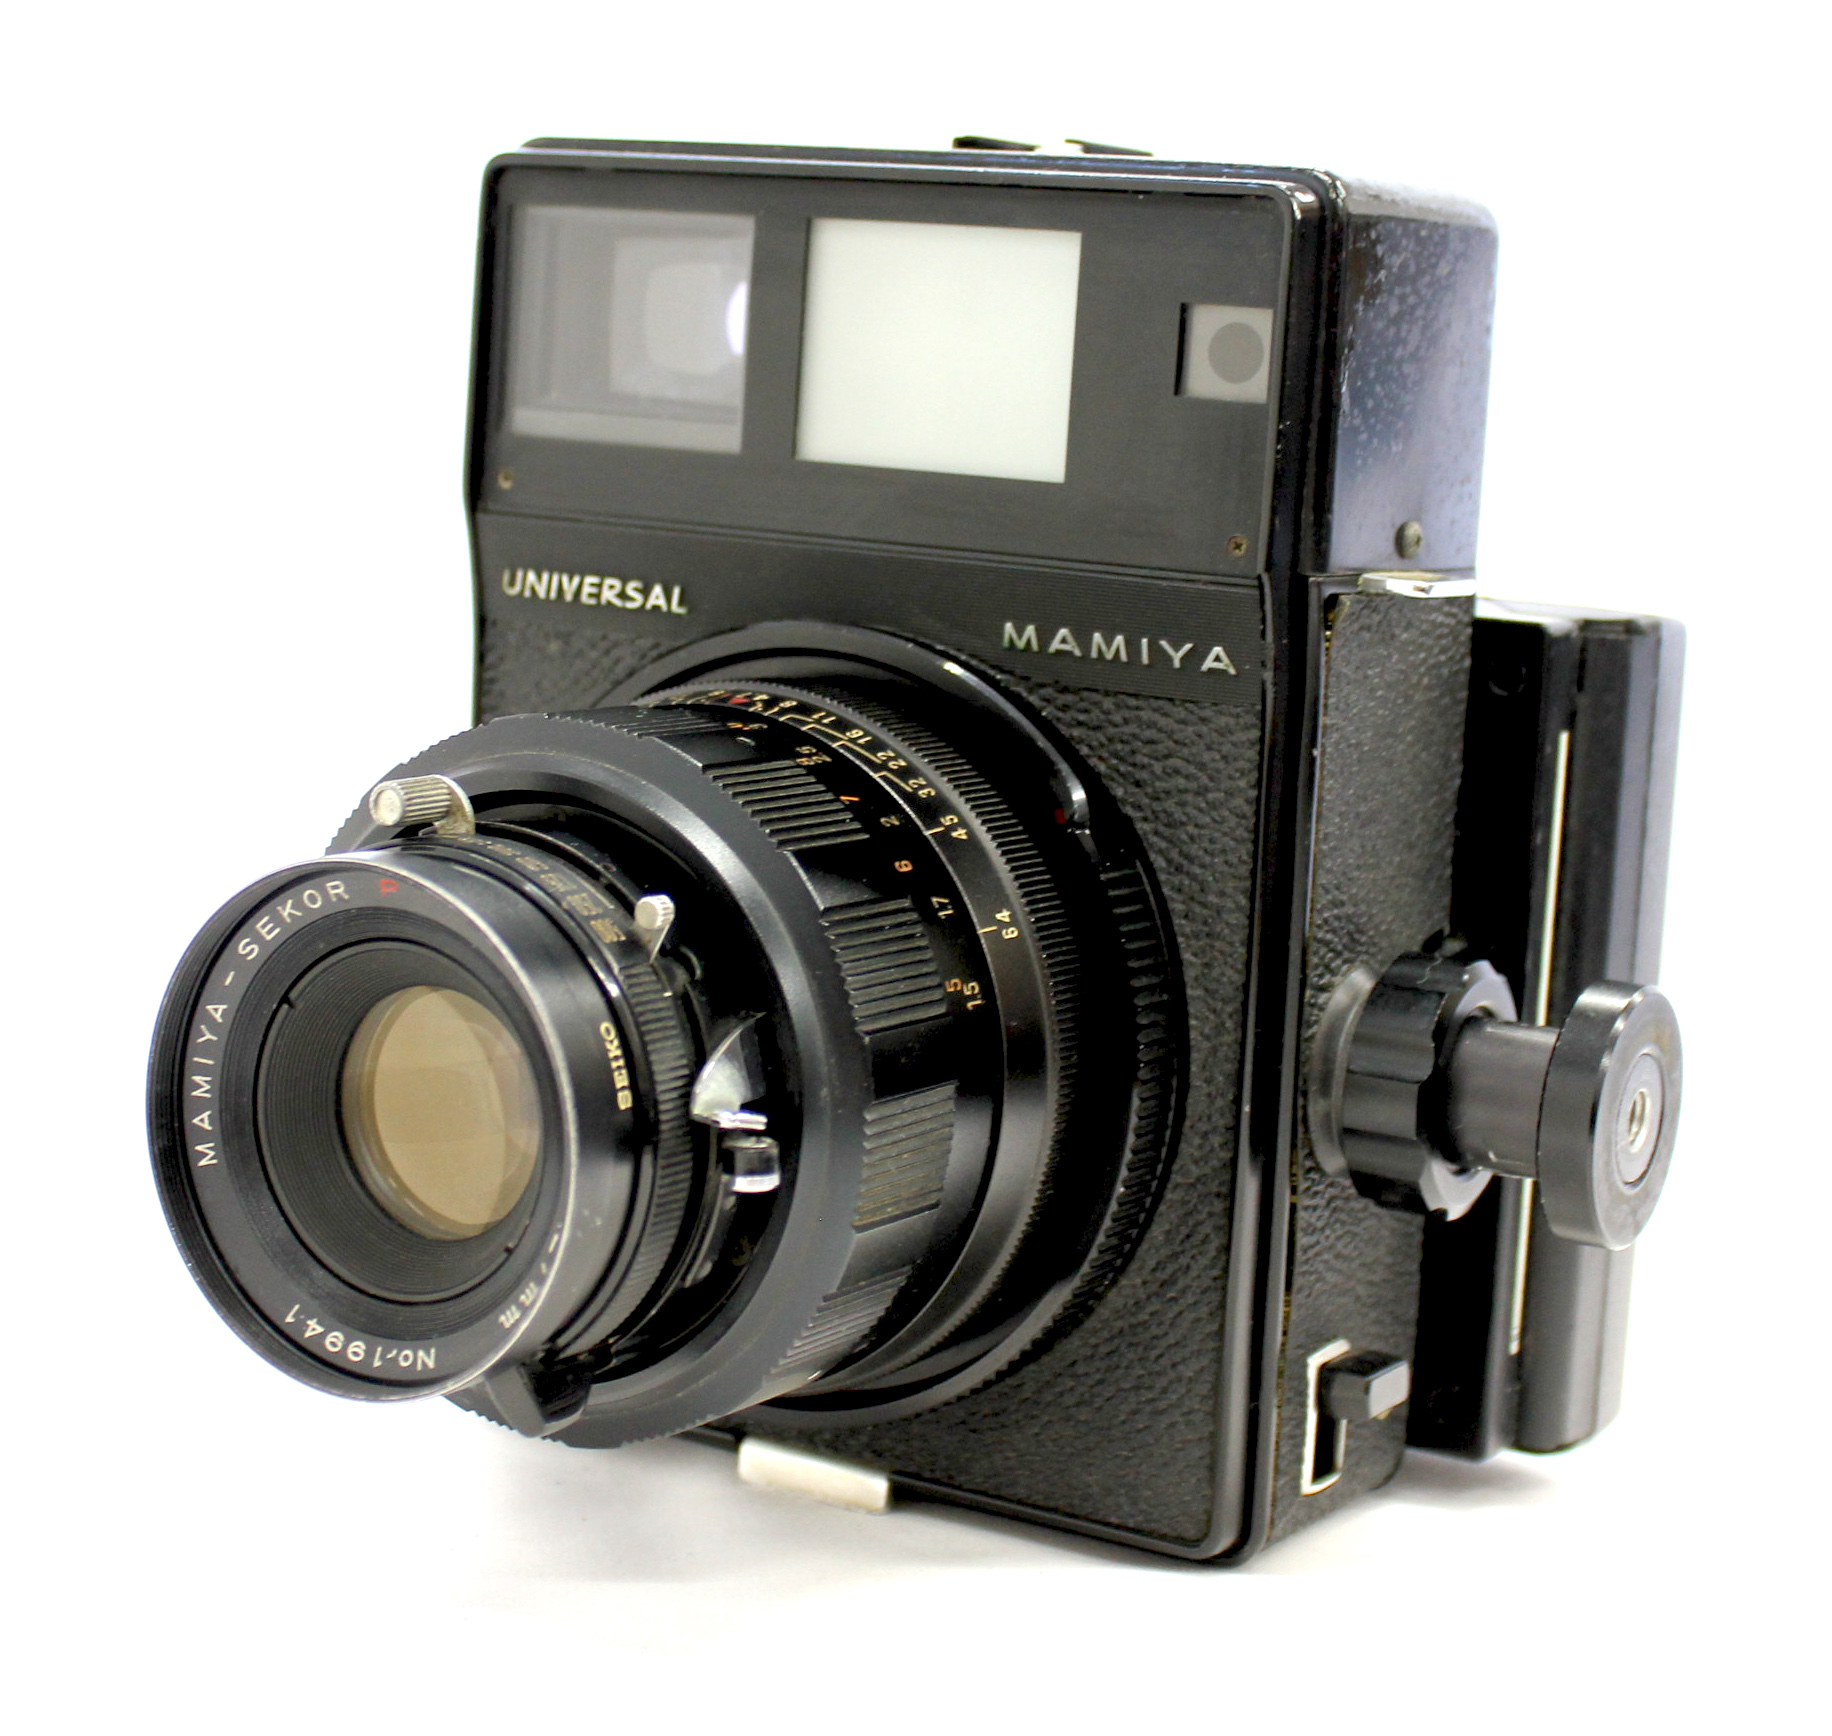 Japan Used Camera Shop | [Exc++] Mamiya Universal Press with Sekor P 127mm F/4.7 Lens & Polaroid Back from Japan